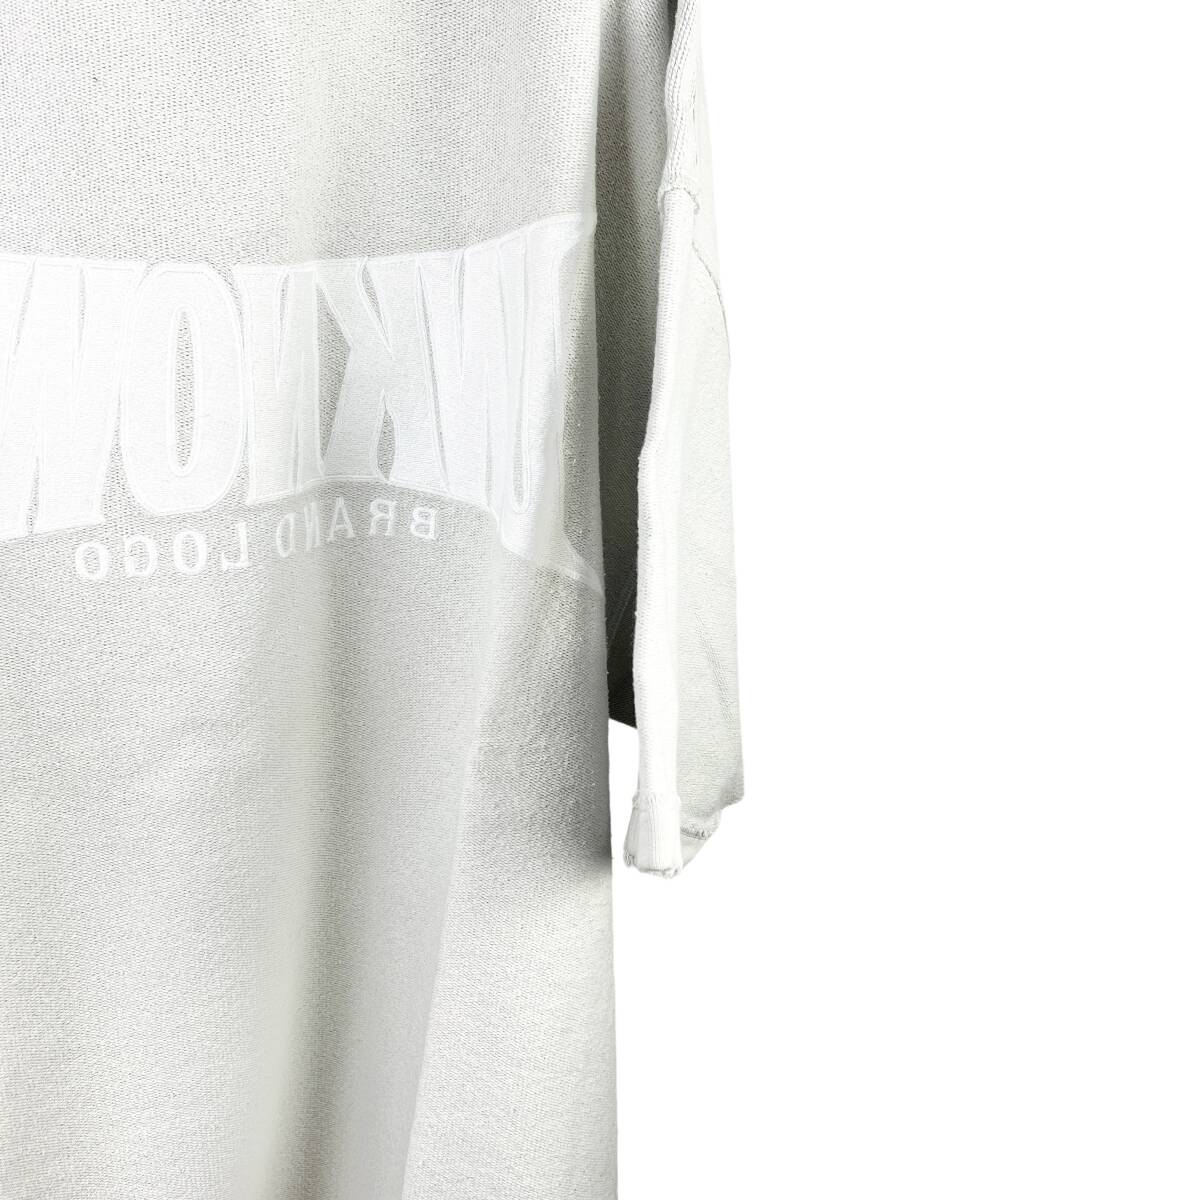 Vetements(ヴェットモン) Mirrored Writing Big Size T Shirt (white)